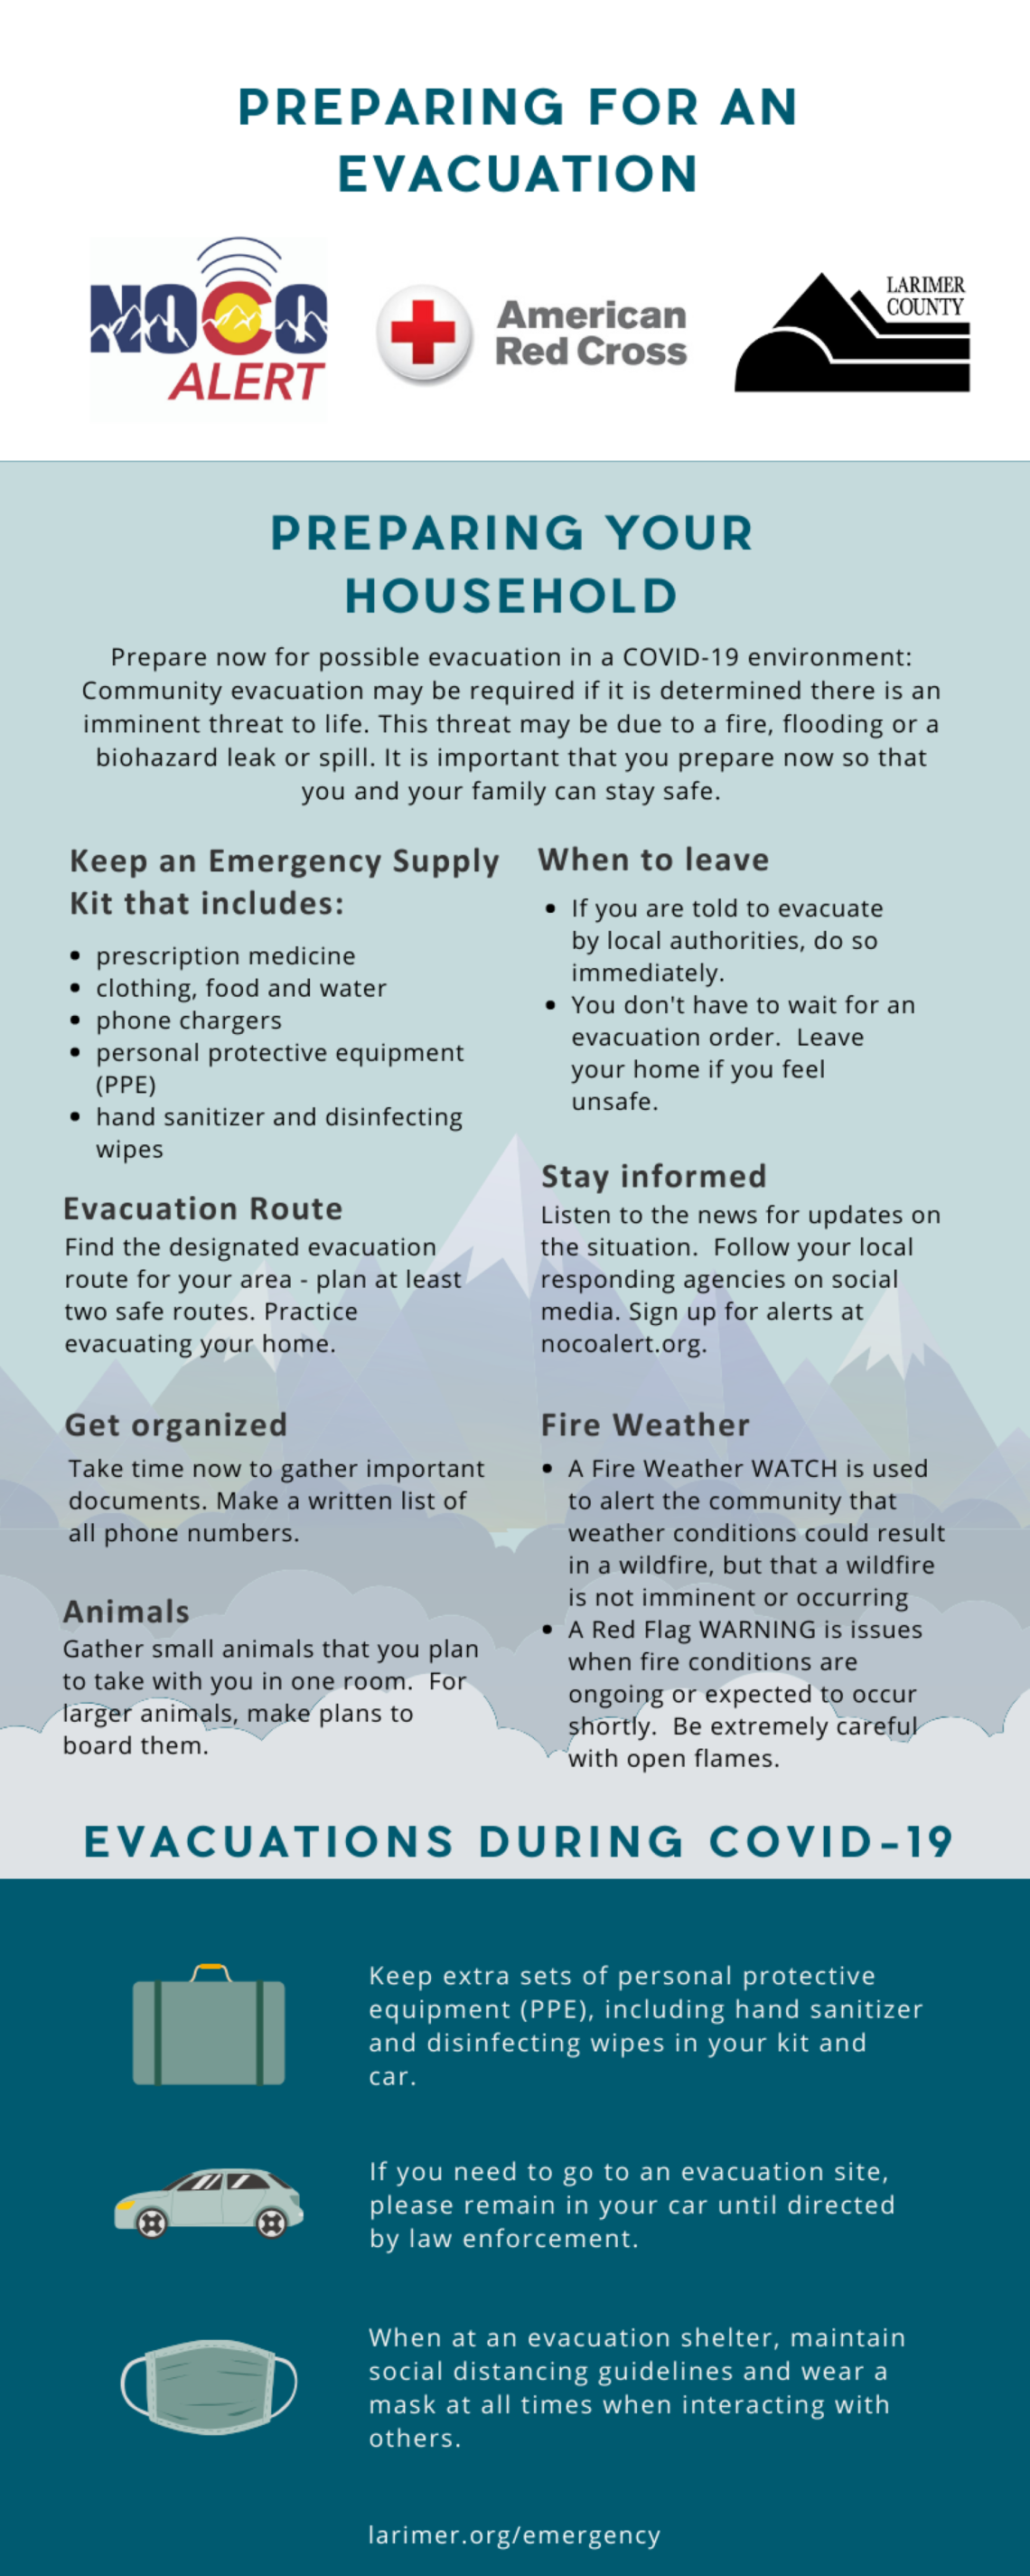 Evacuation Tips with COVID